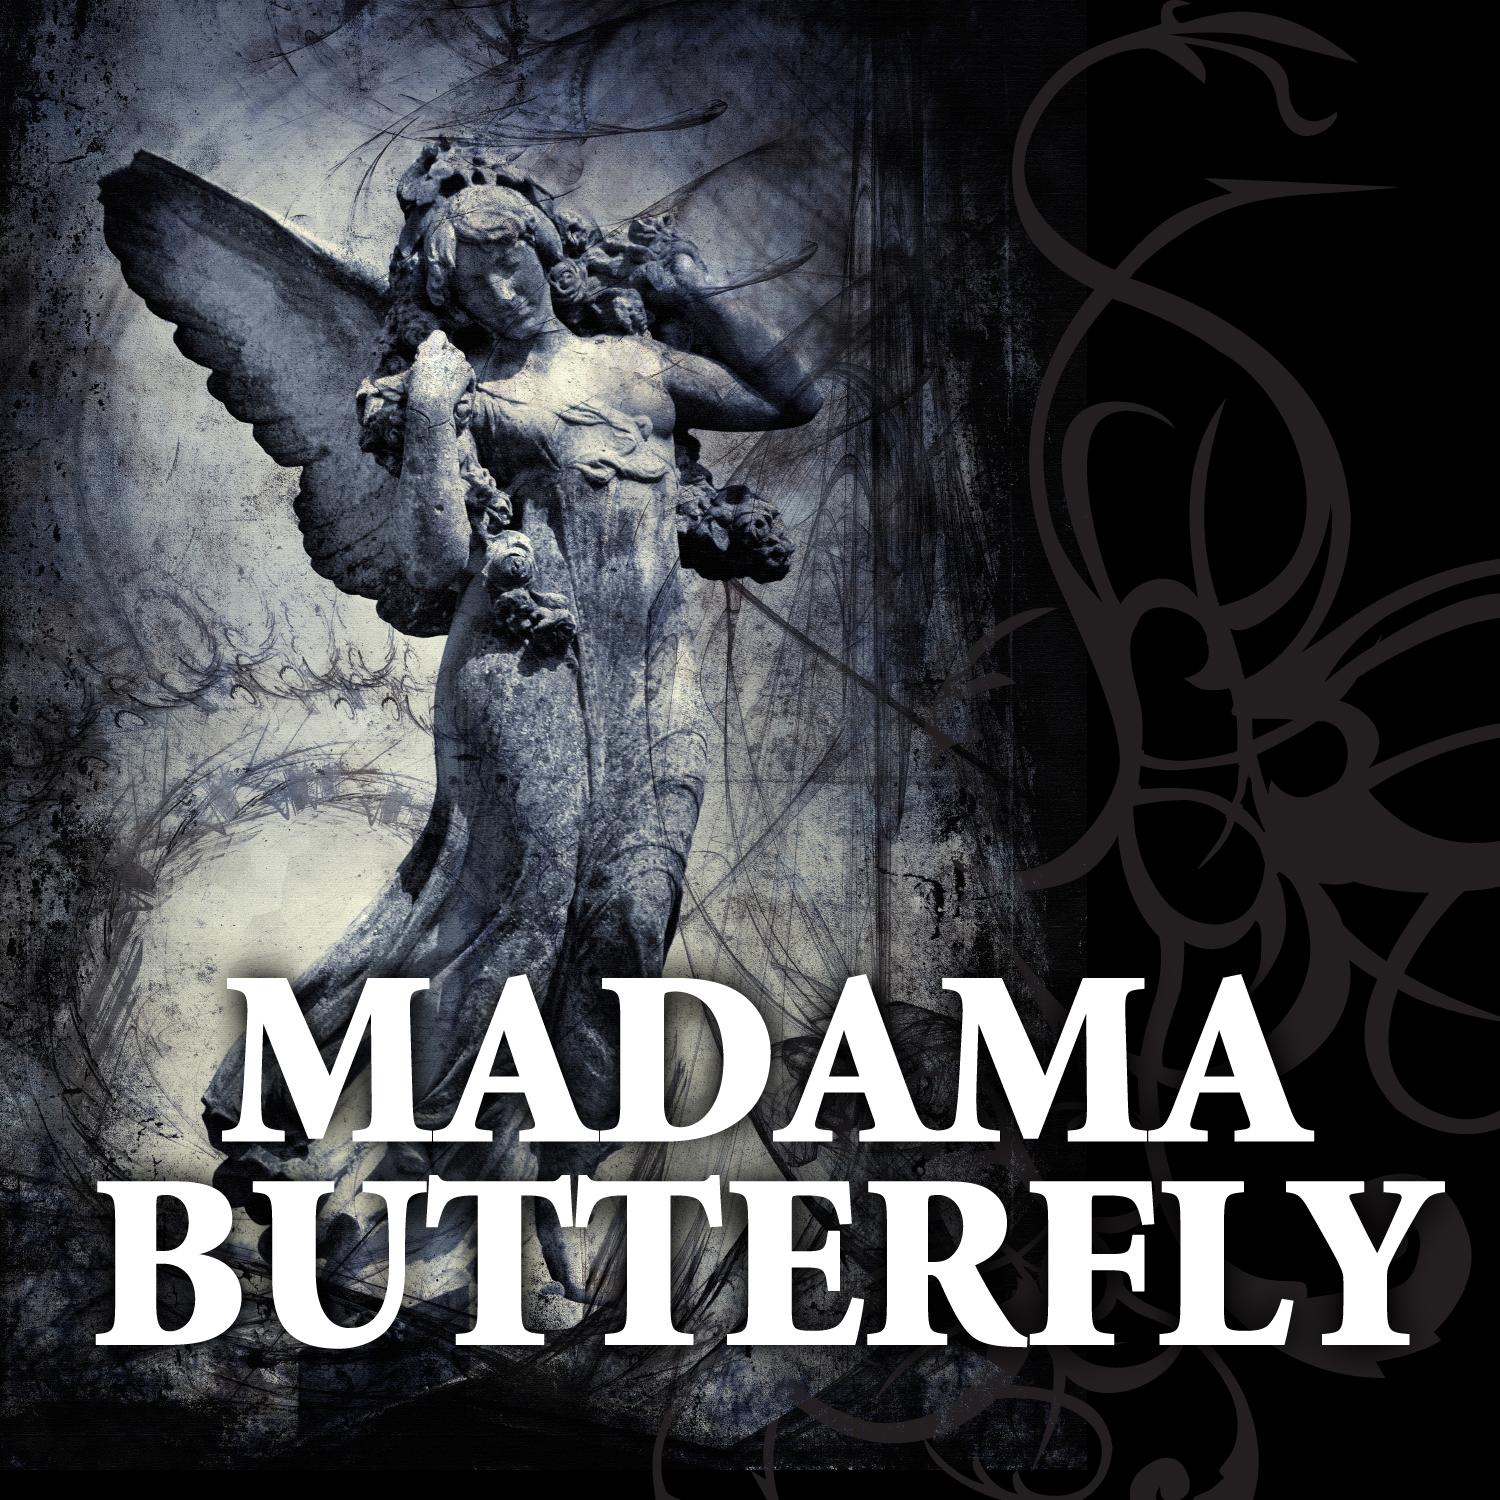 Madama Butterfly, Act III: Suzuki, suzuki!